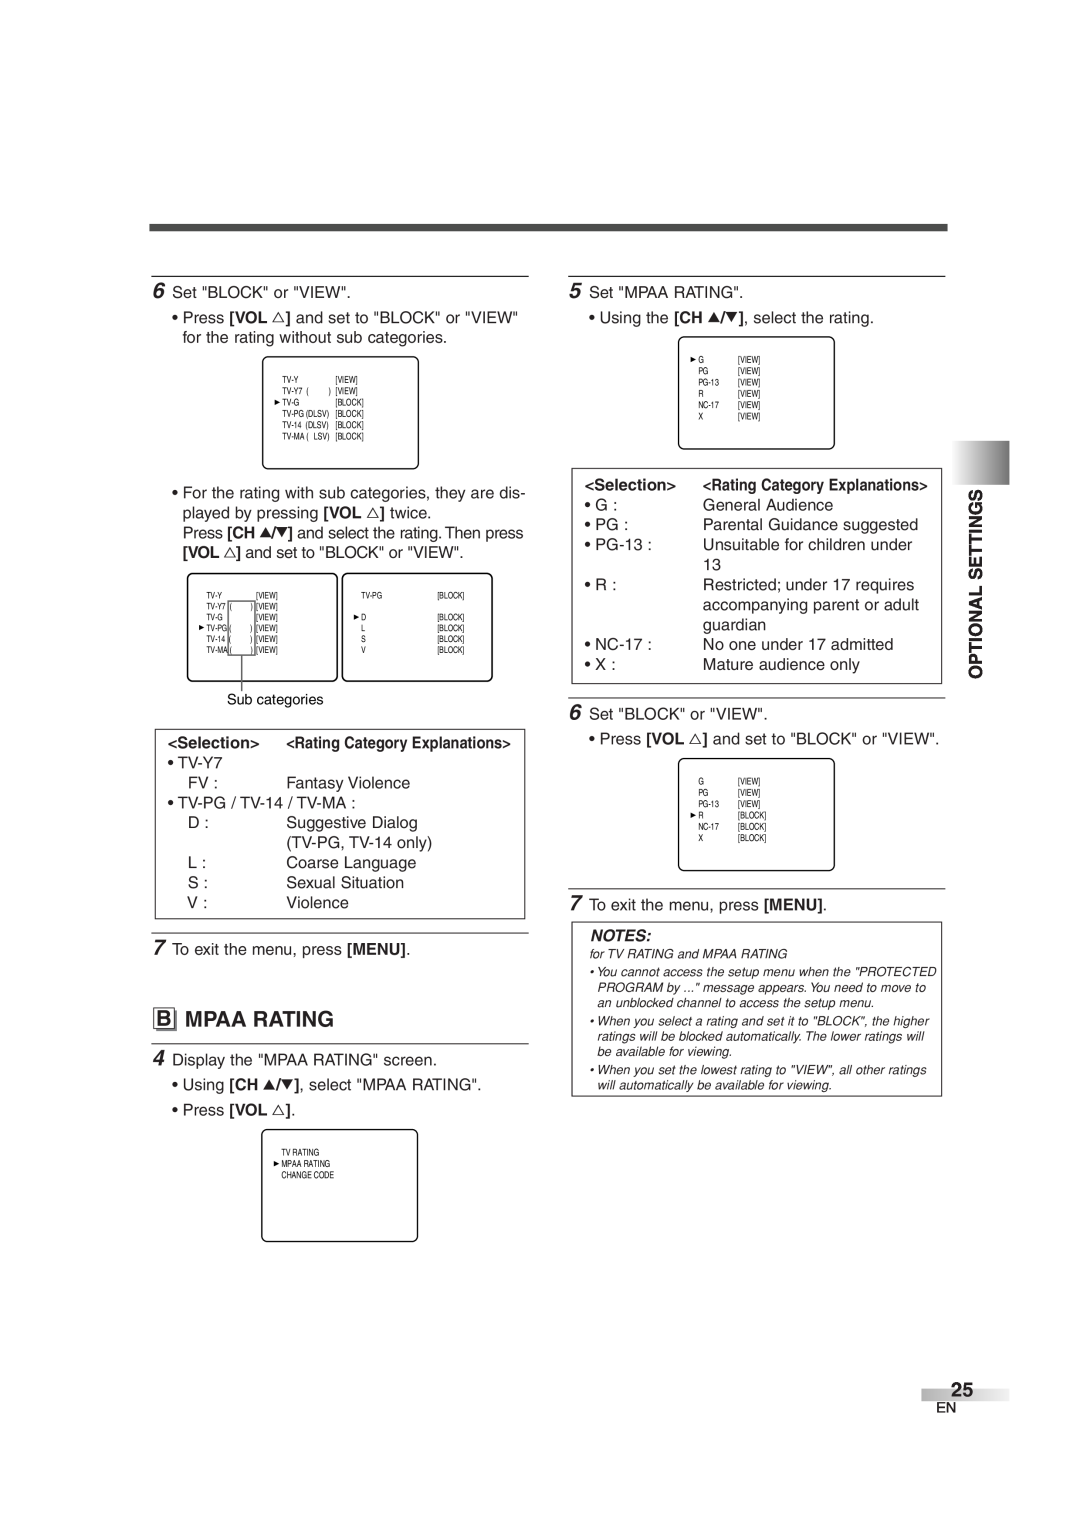 FUNAI MJ427GG manual B Mpaa Rating, Selection, Rating Category Explanations 